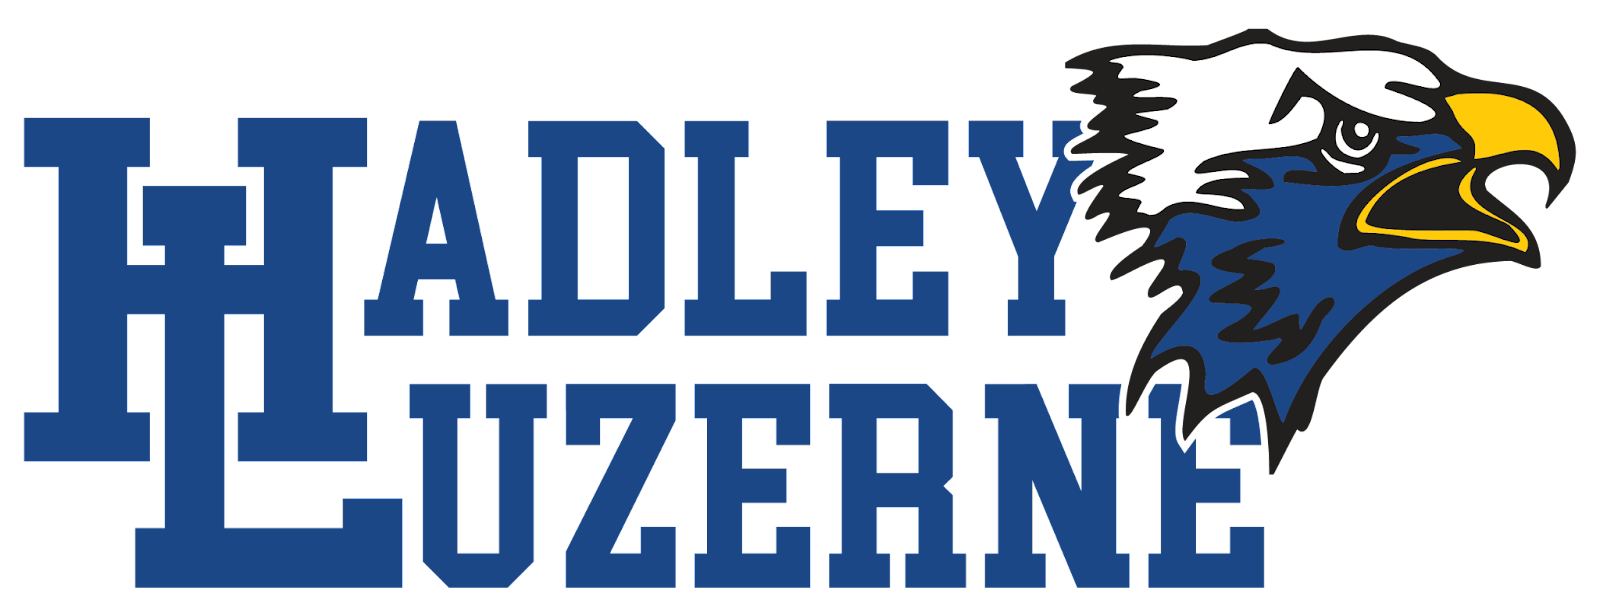 Hadley Athletics logo